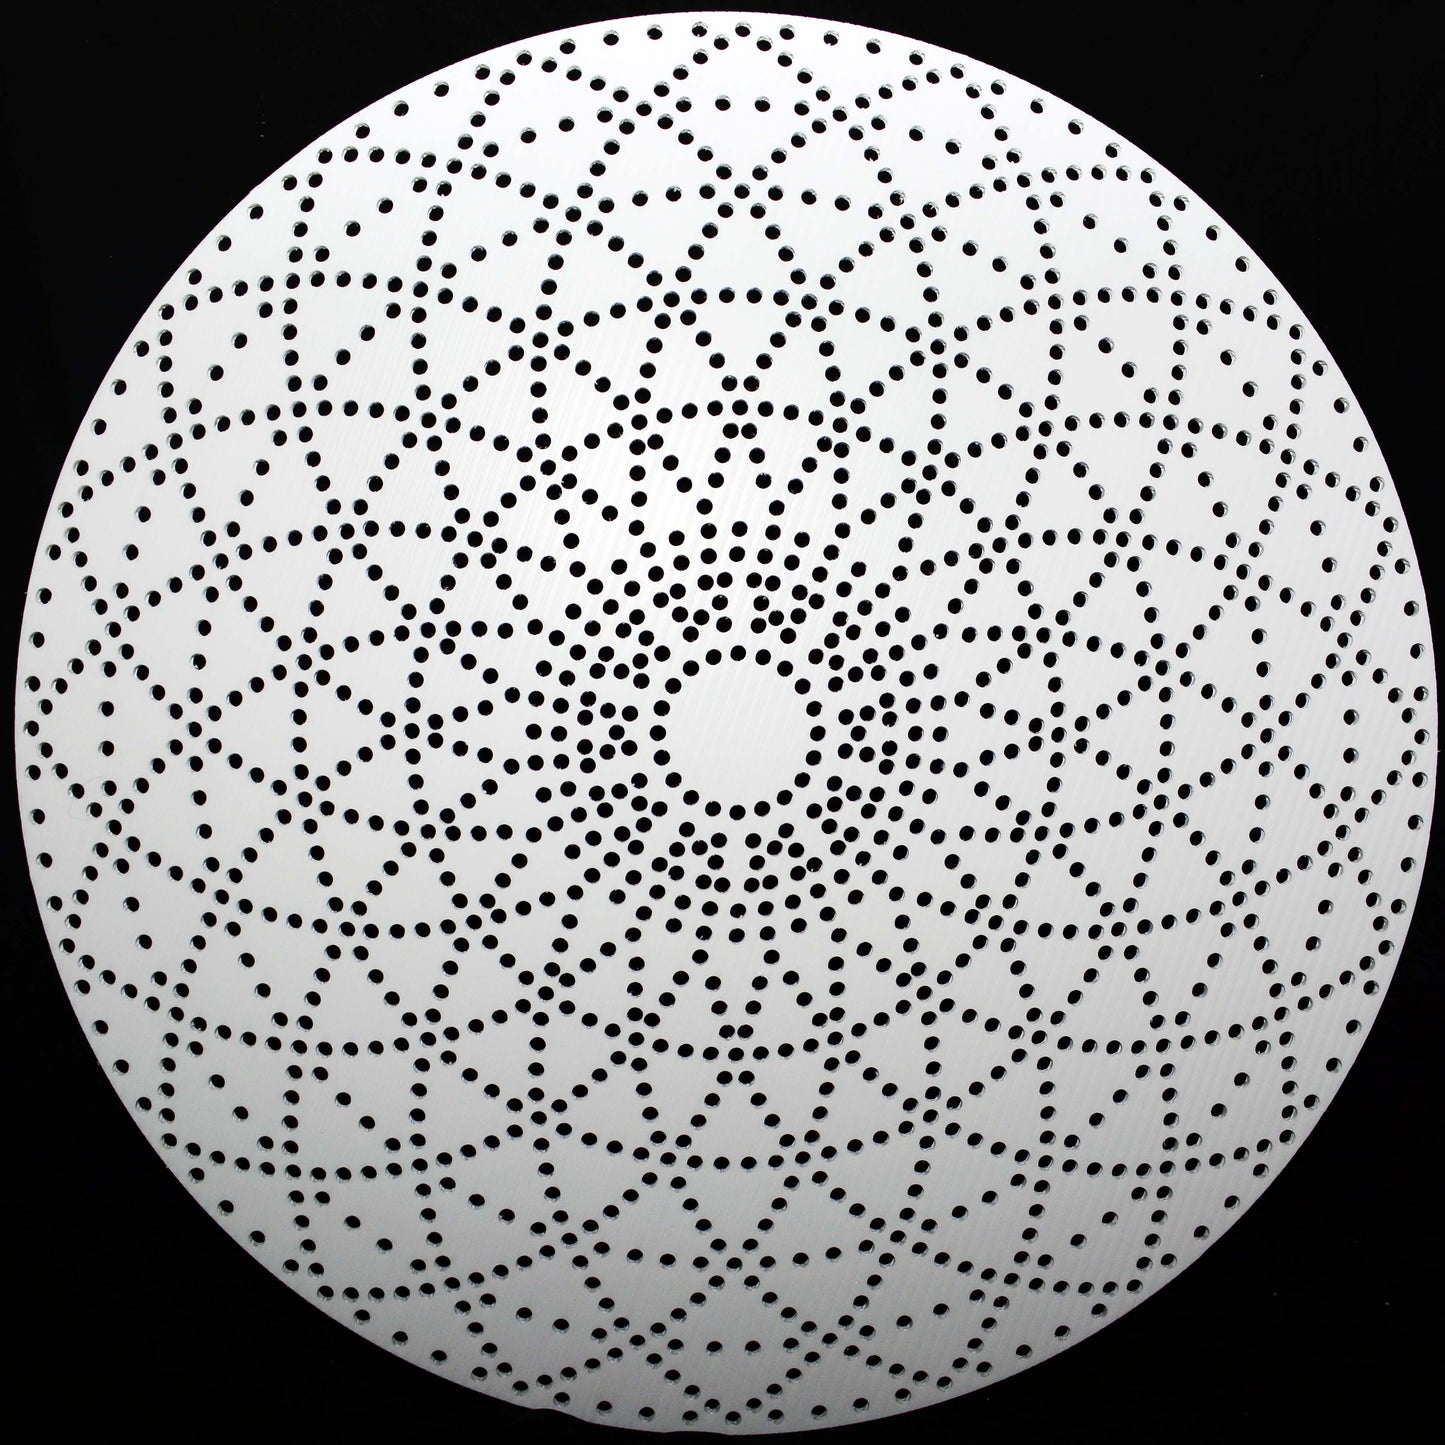 Infinity Spinner, 43", 1,450 pixels